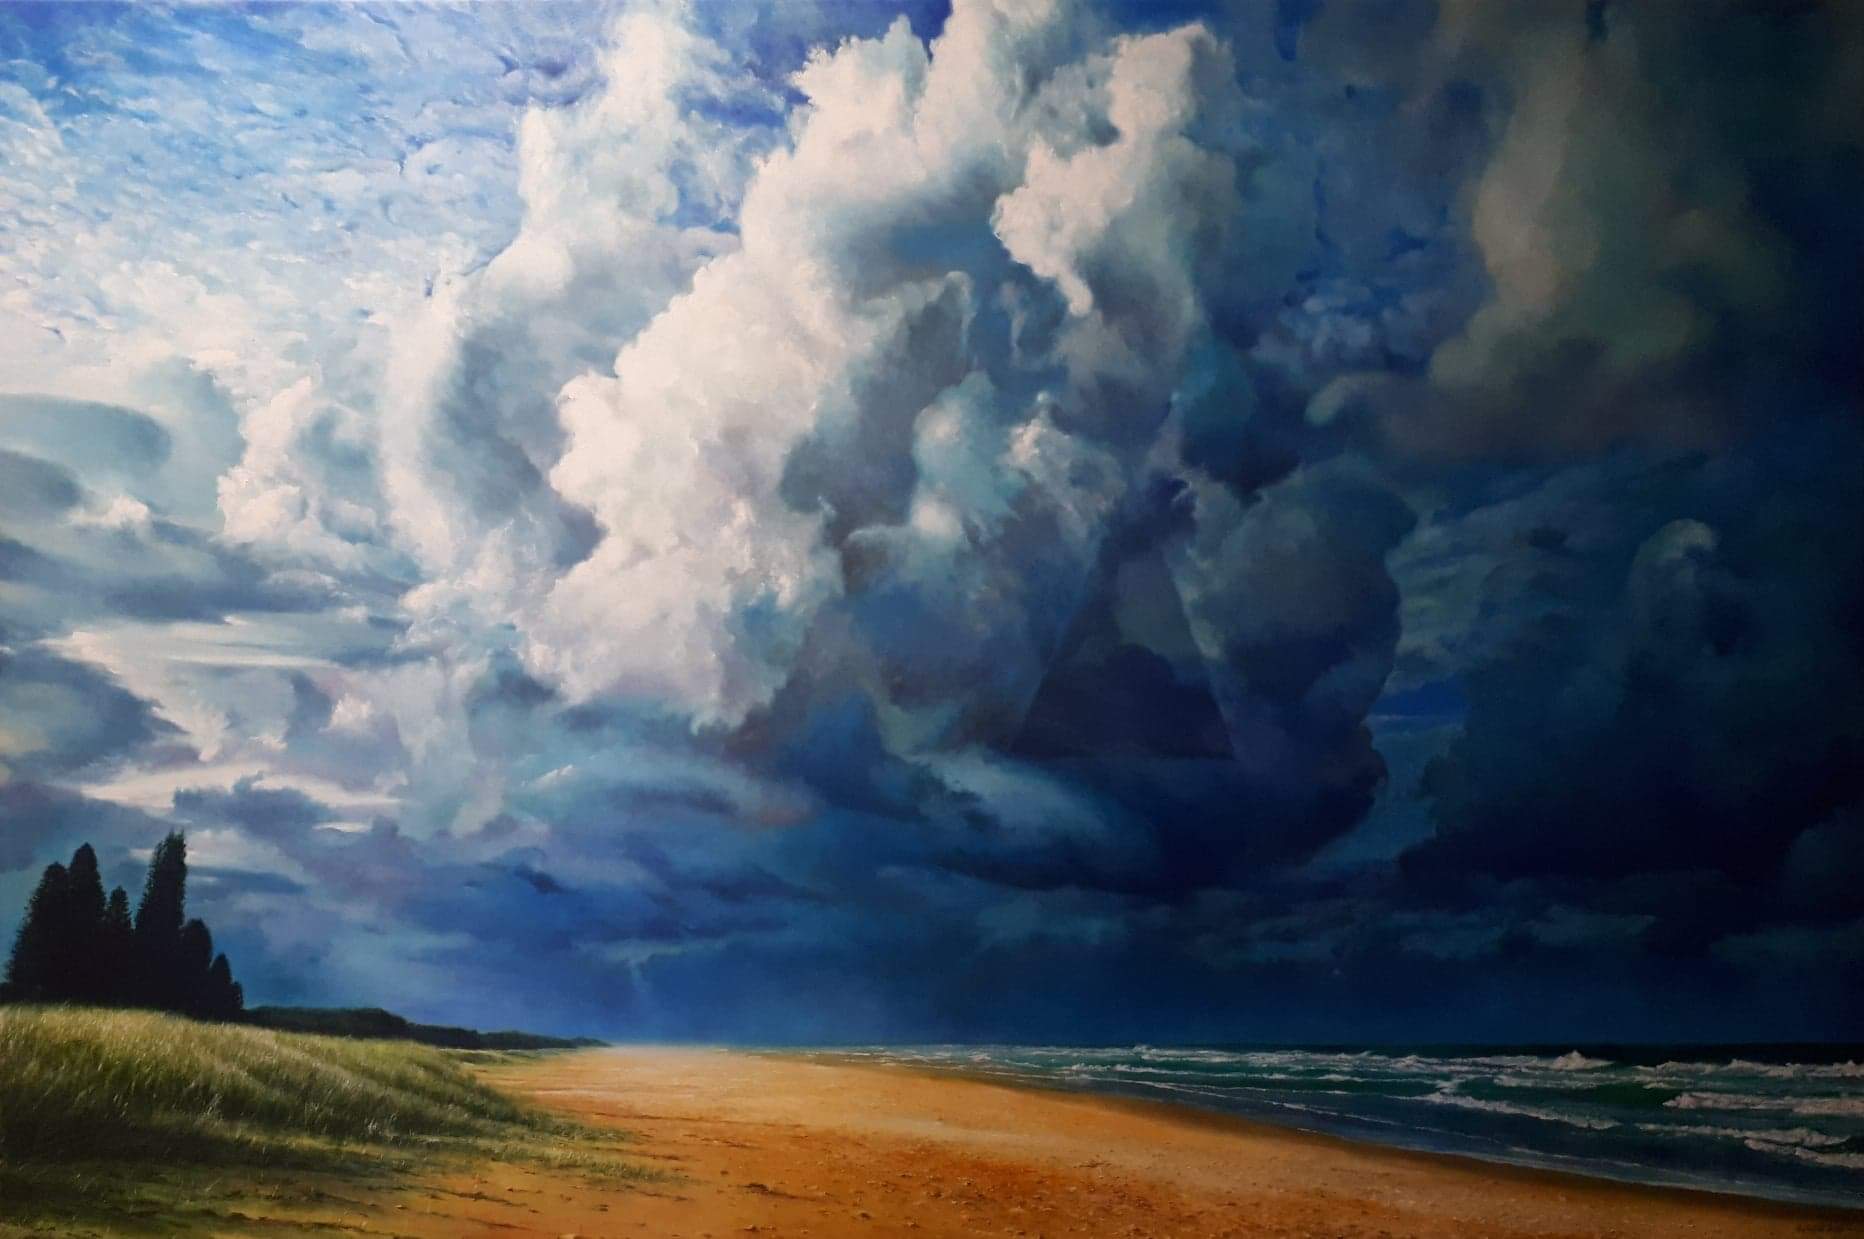 Cloudland - Coolum Beach  by Anthony Quidong | Lethbridge Landscape Prize 2022 Finalists | Lethbridge Gallery